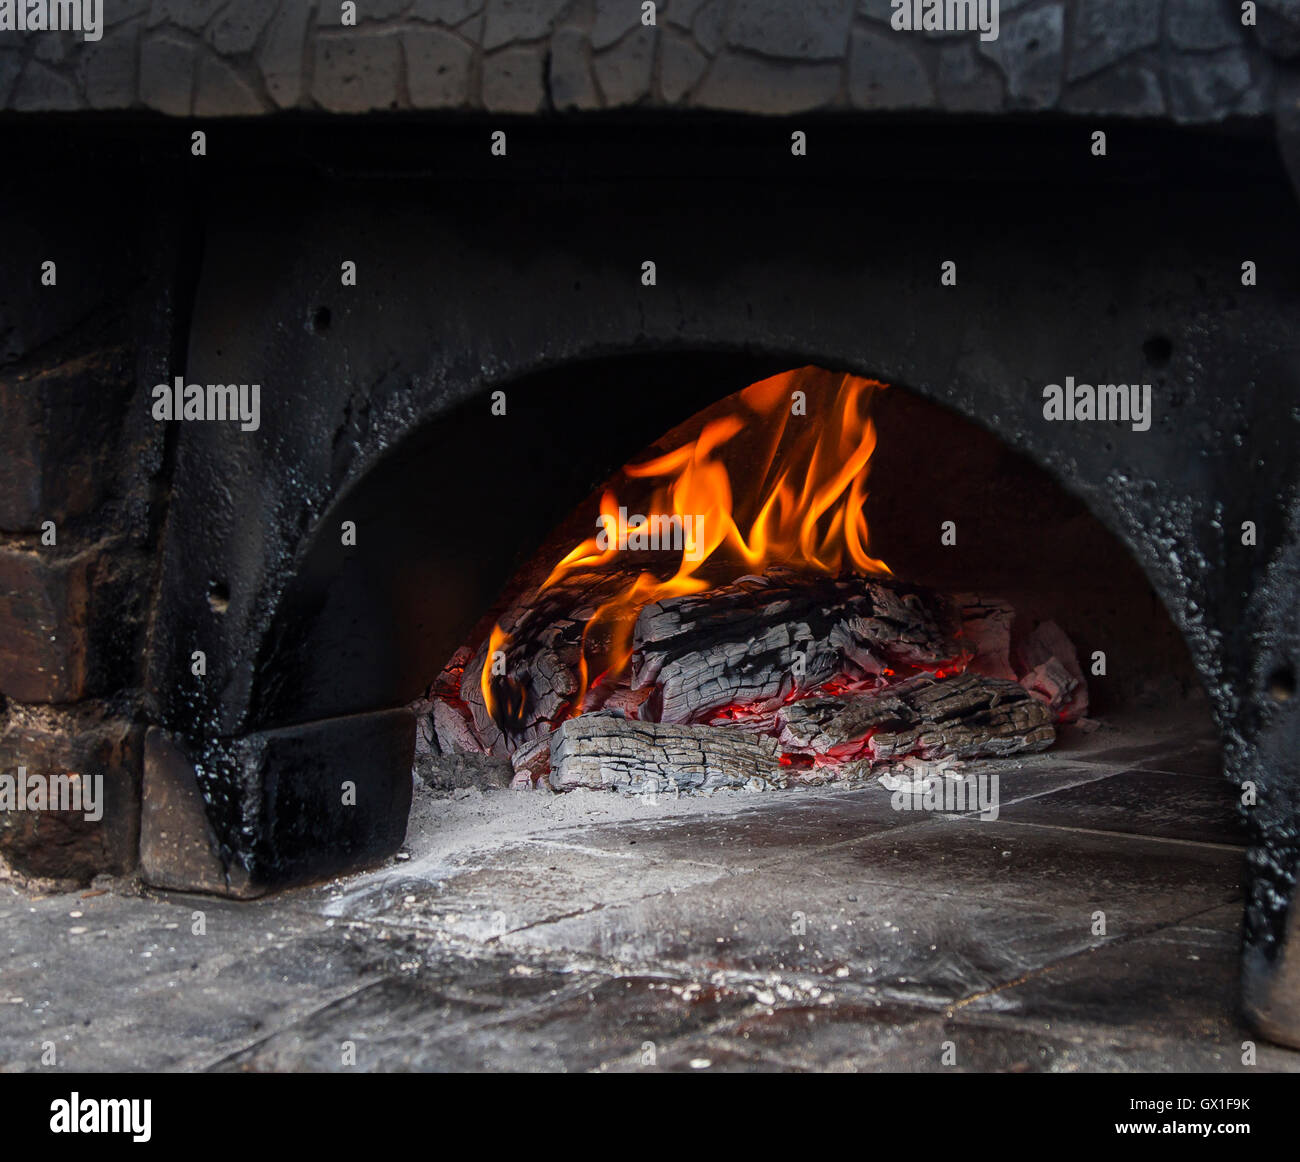 Pizza oven Stock Photo